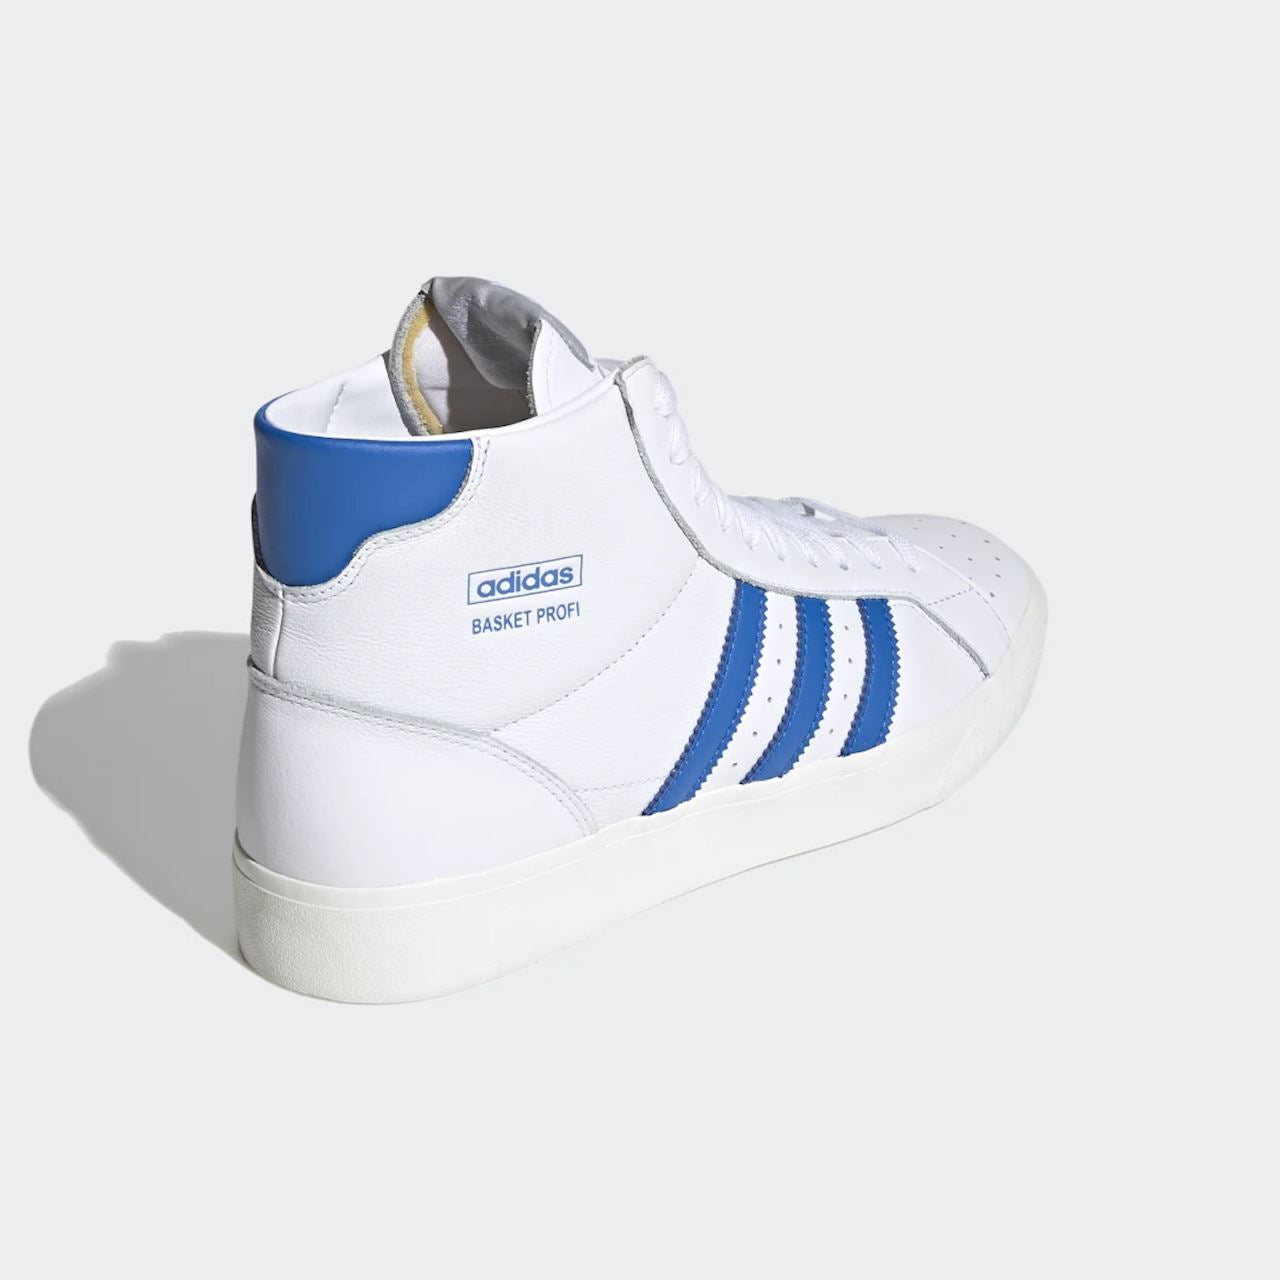 garn Ny ankomst udredning Adidas Originals Men's Basket Profi Mid Shoes - White UK 4.5 - Trade Sports